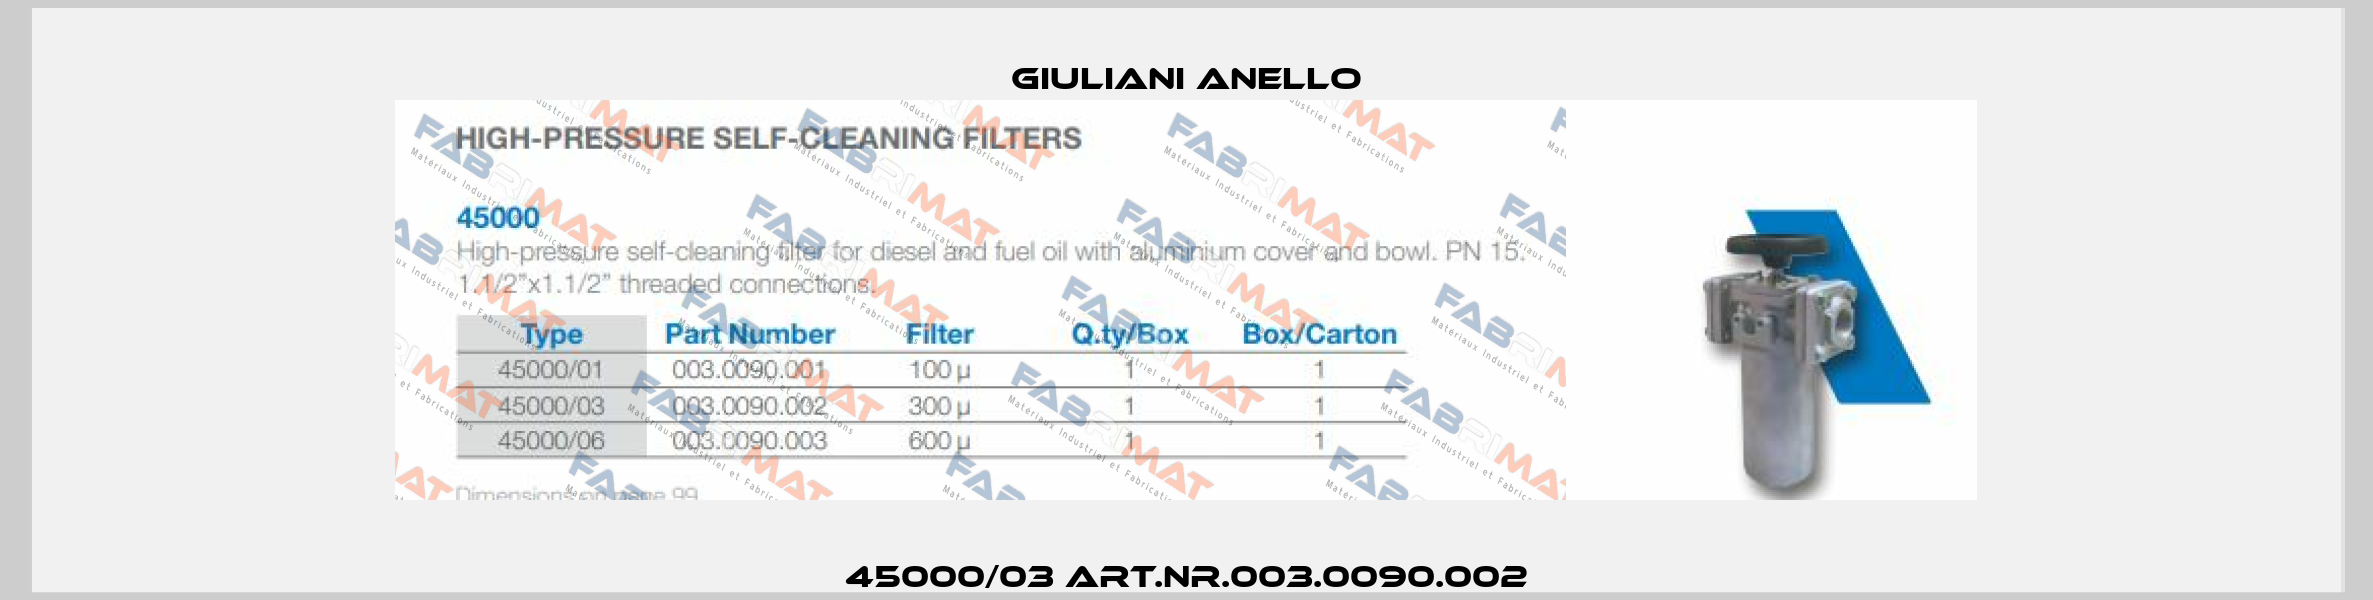 45000/03 Art.Nr.003.0090.002 Giuliani Anello